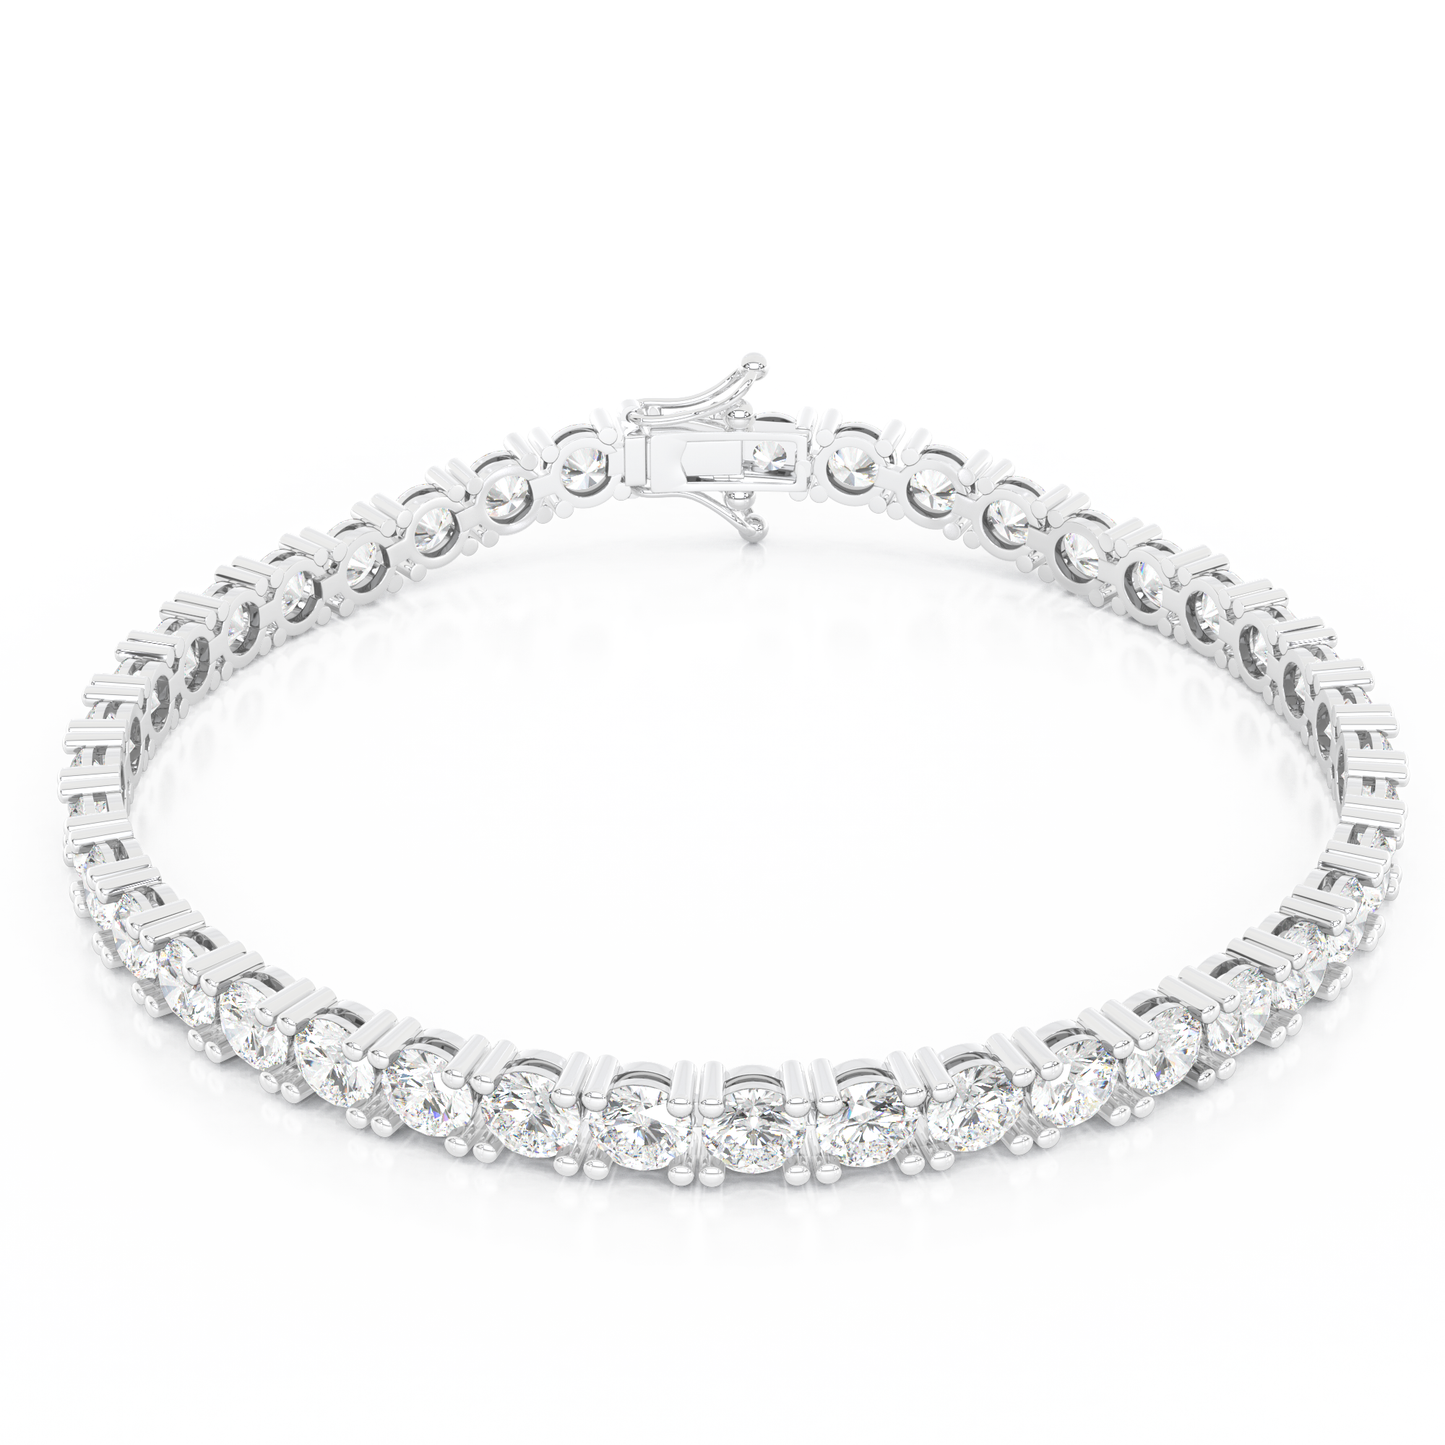 3.00cts+ 4-Prong Lab Grown Diamond Bracelet <Affordable>